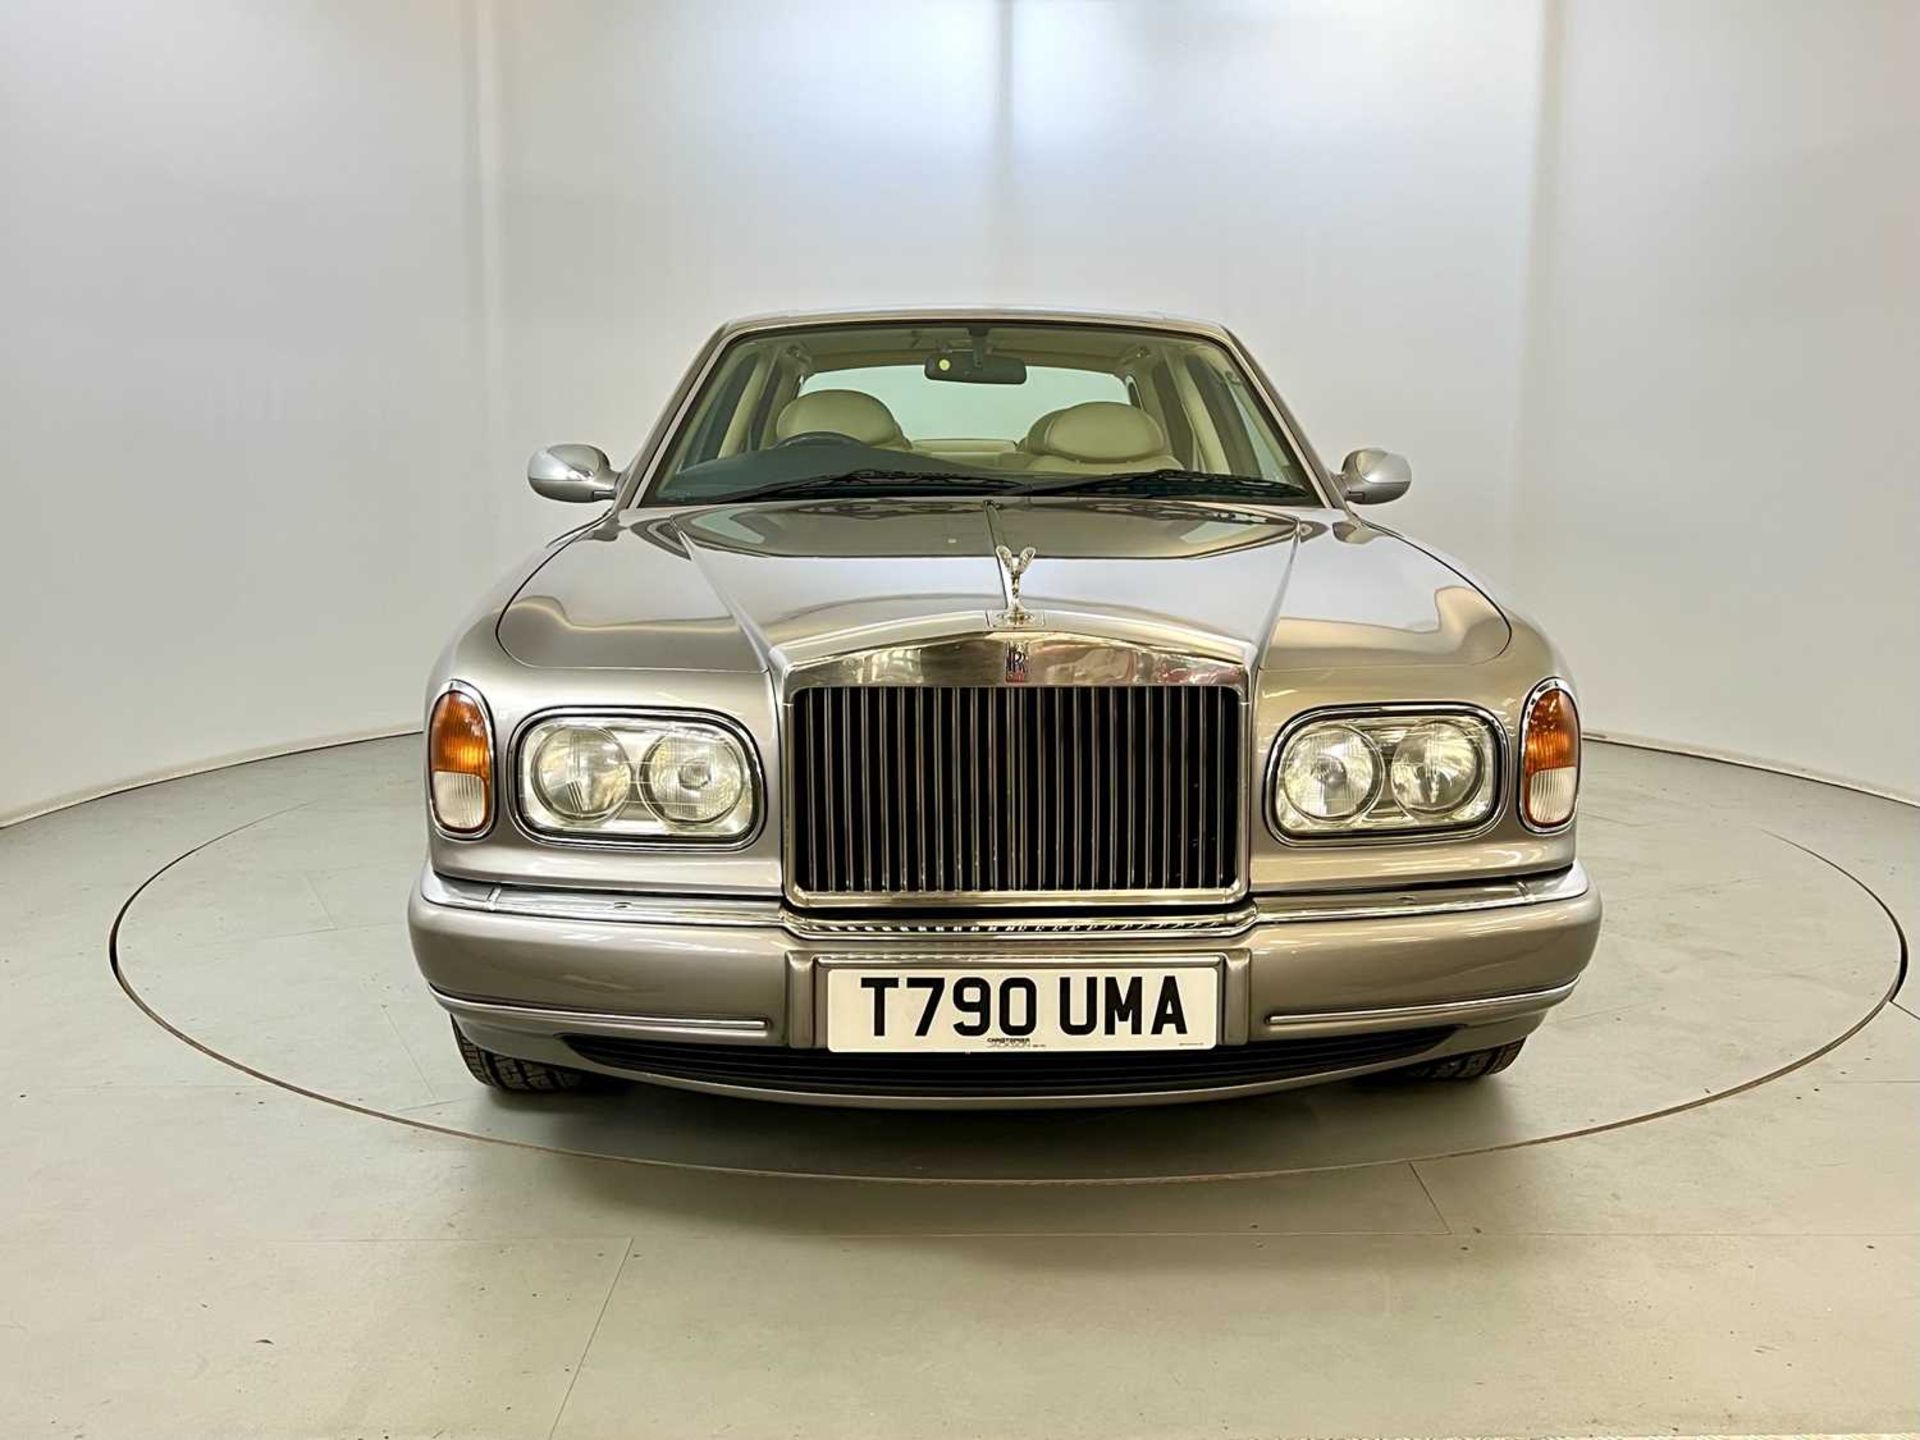 1999 Rolls Royce Silver Seraph - Image 2 of 38